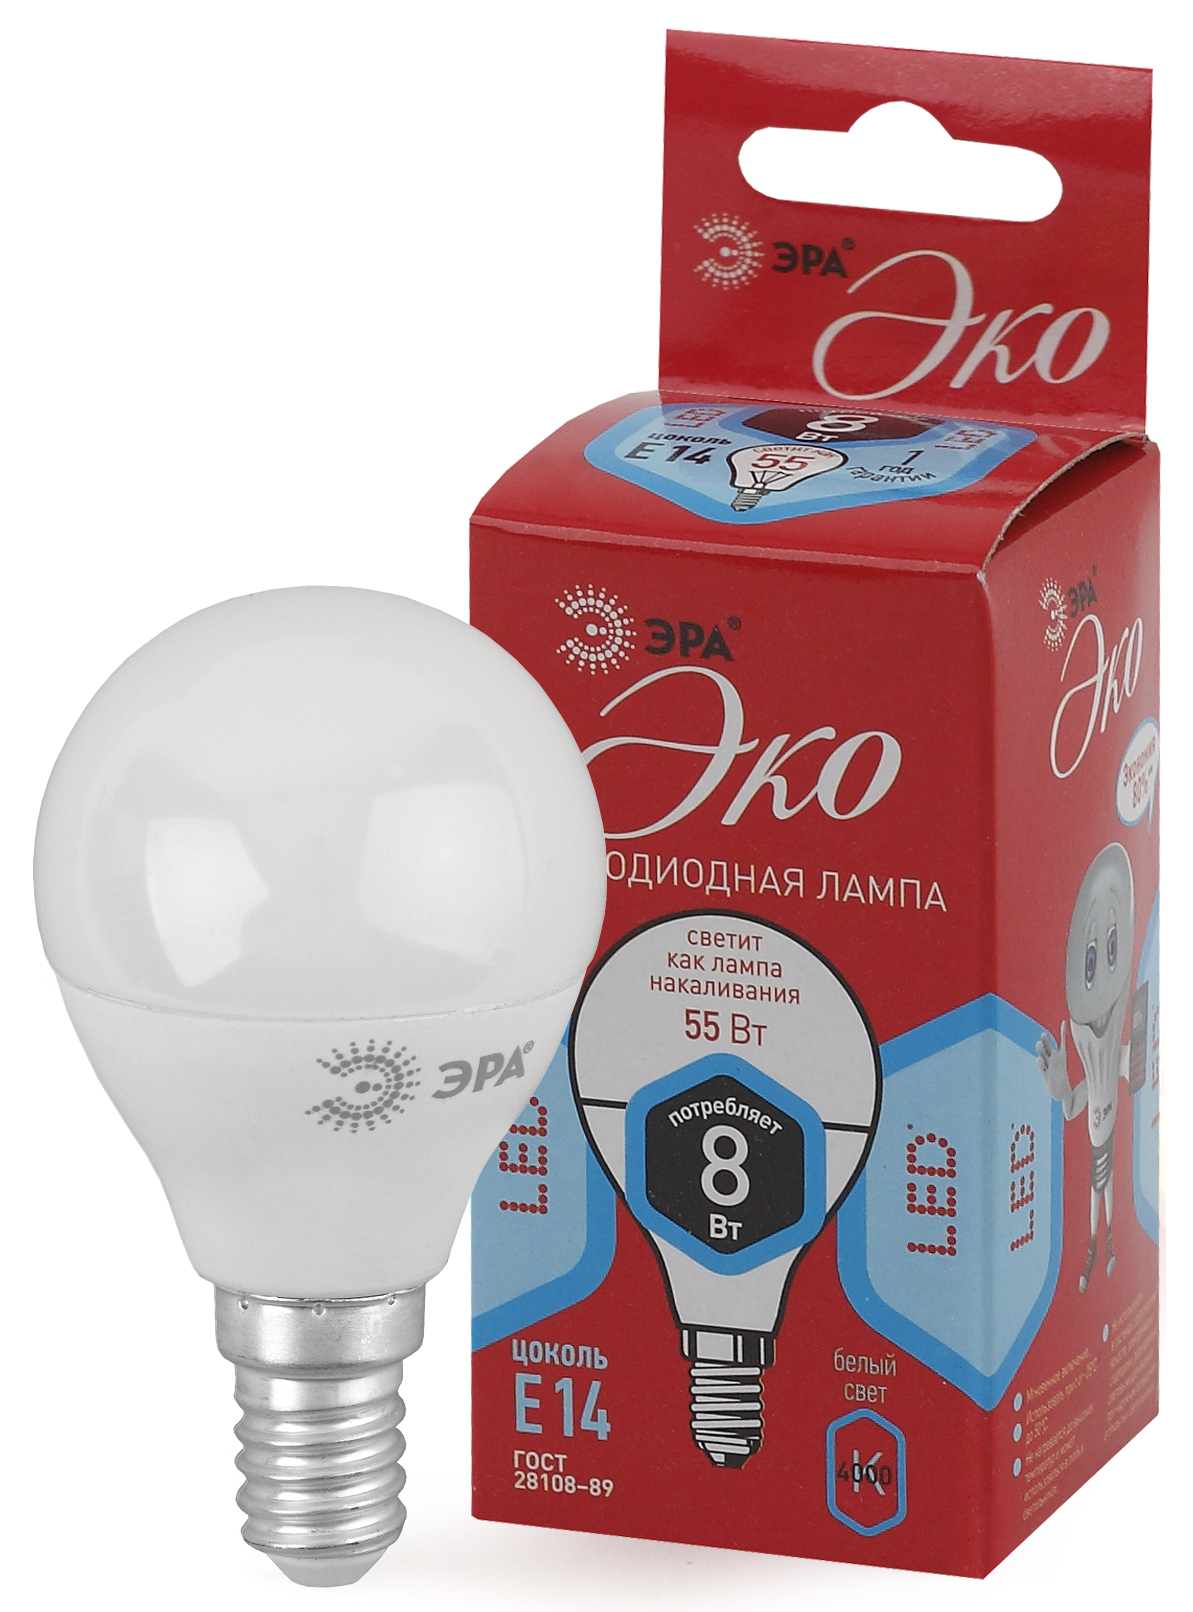 Лампочки LED E14 Эра эра eco led p45-8w-840-e14